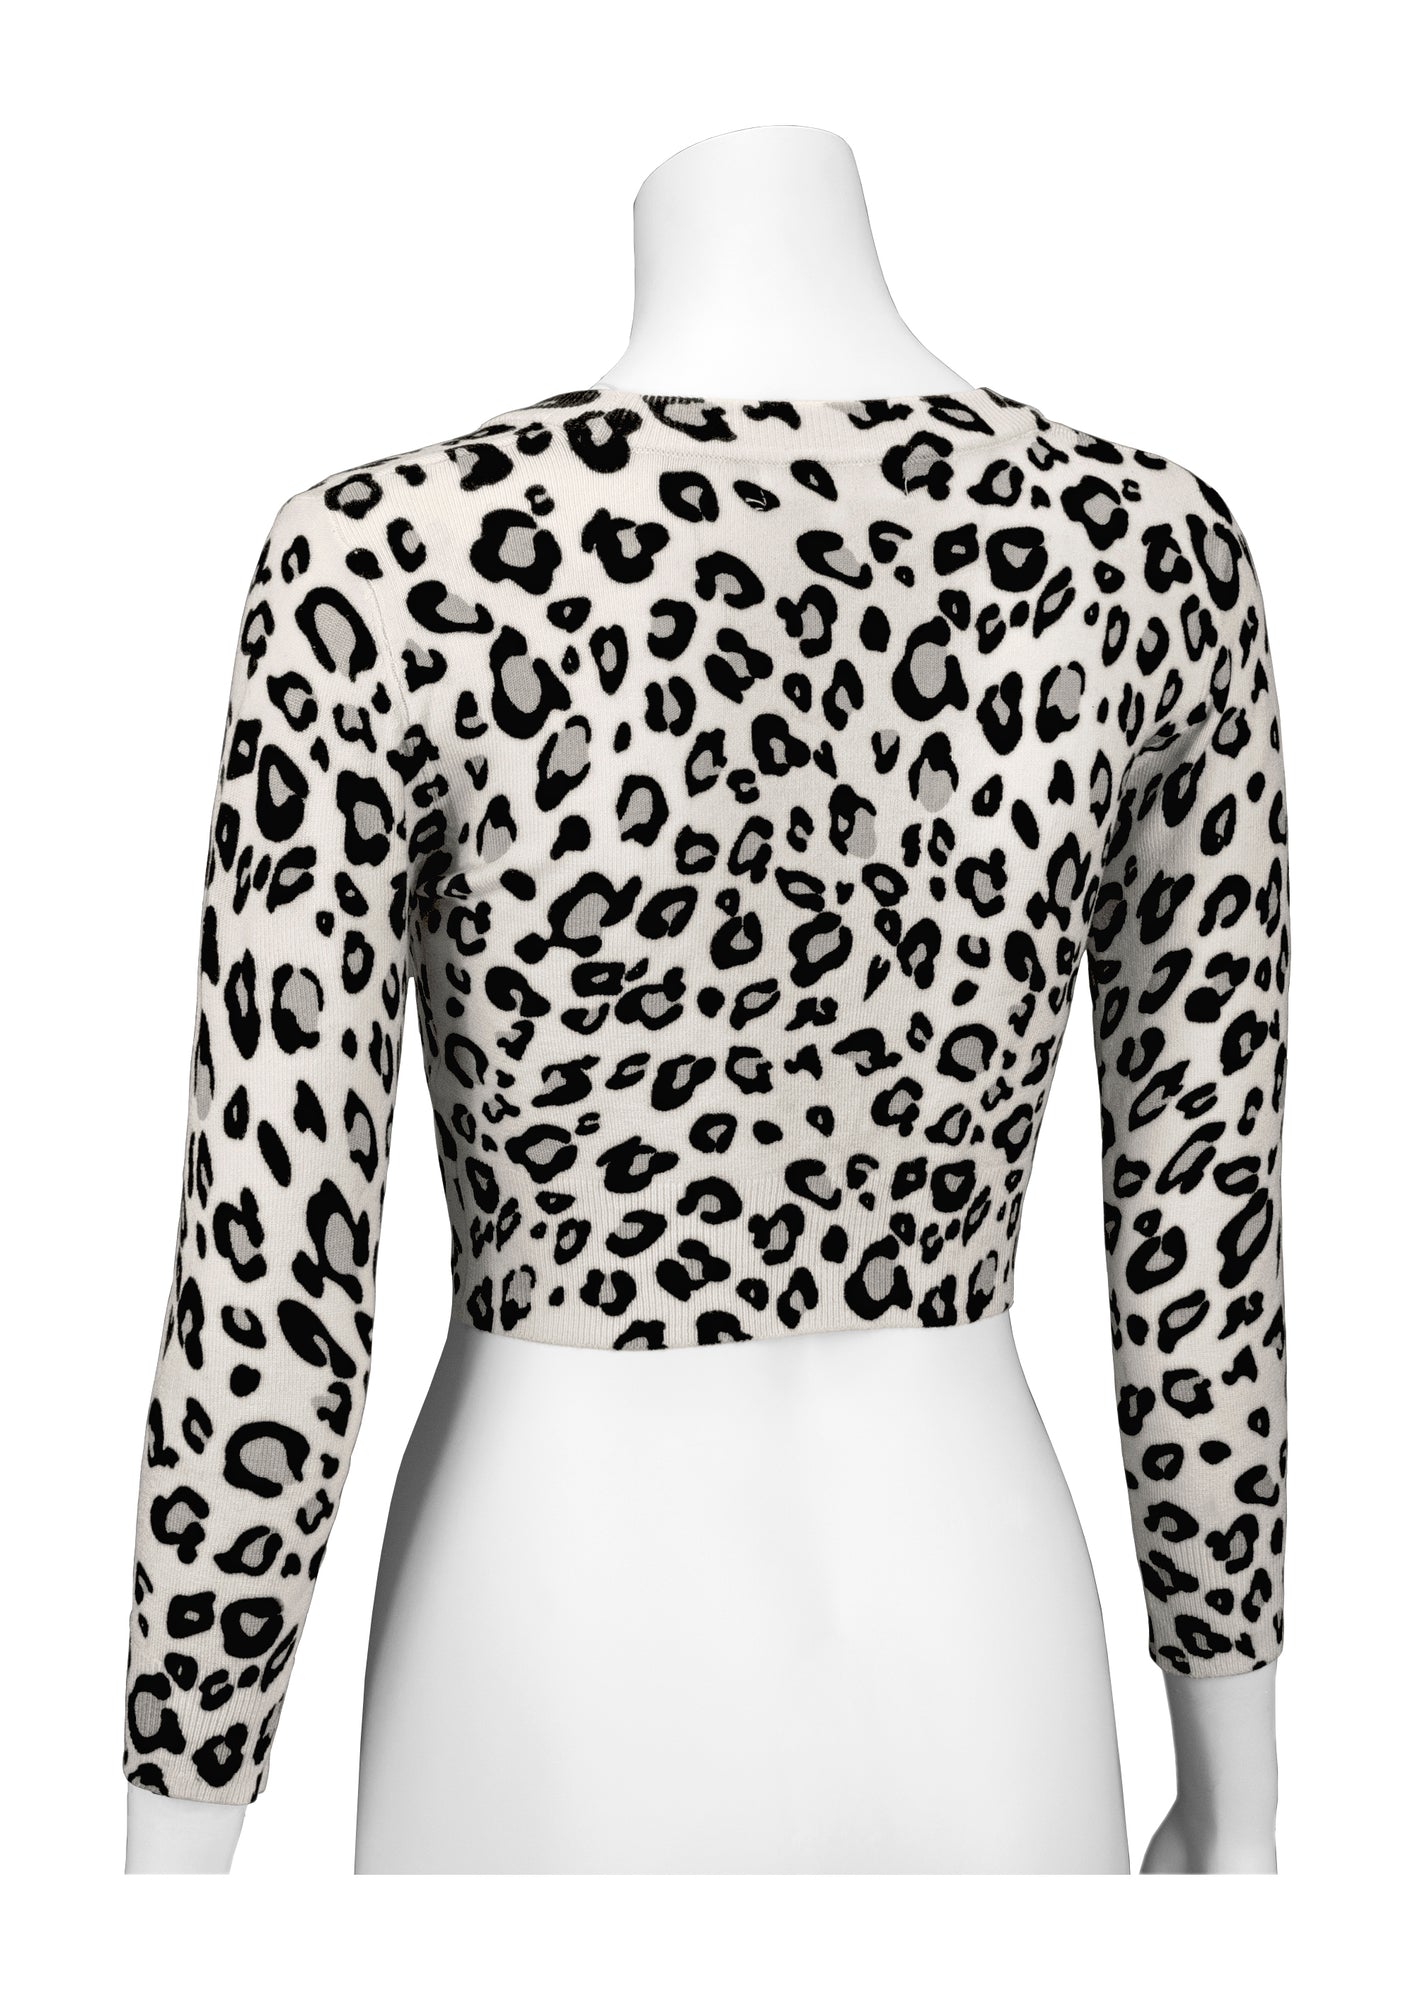 NWT Lucky Brand Black/Grey/White Leopard Print Sweater size 3X